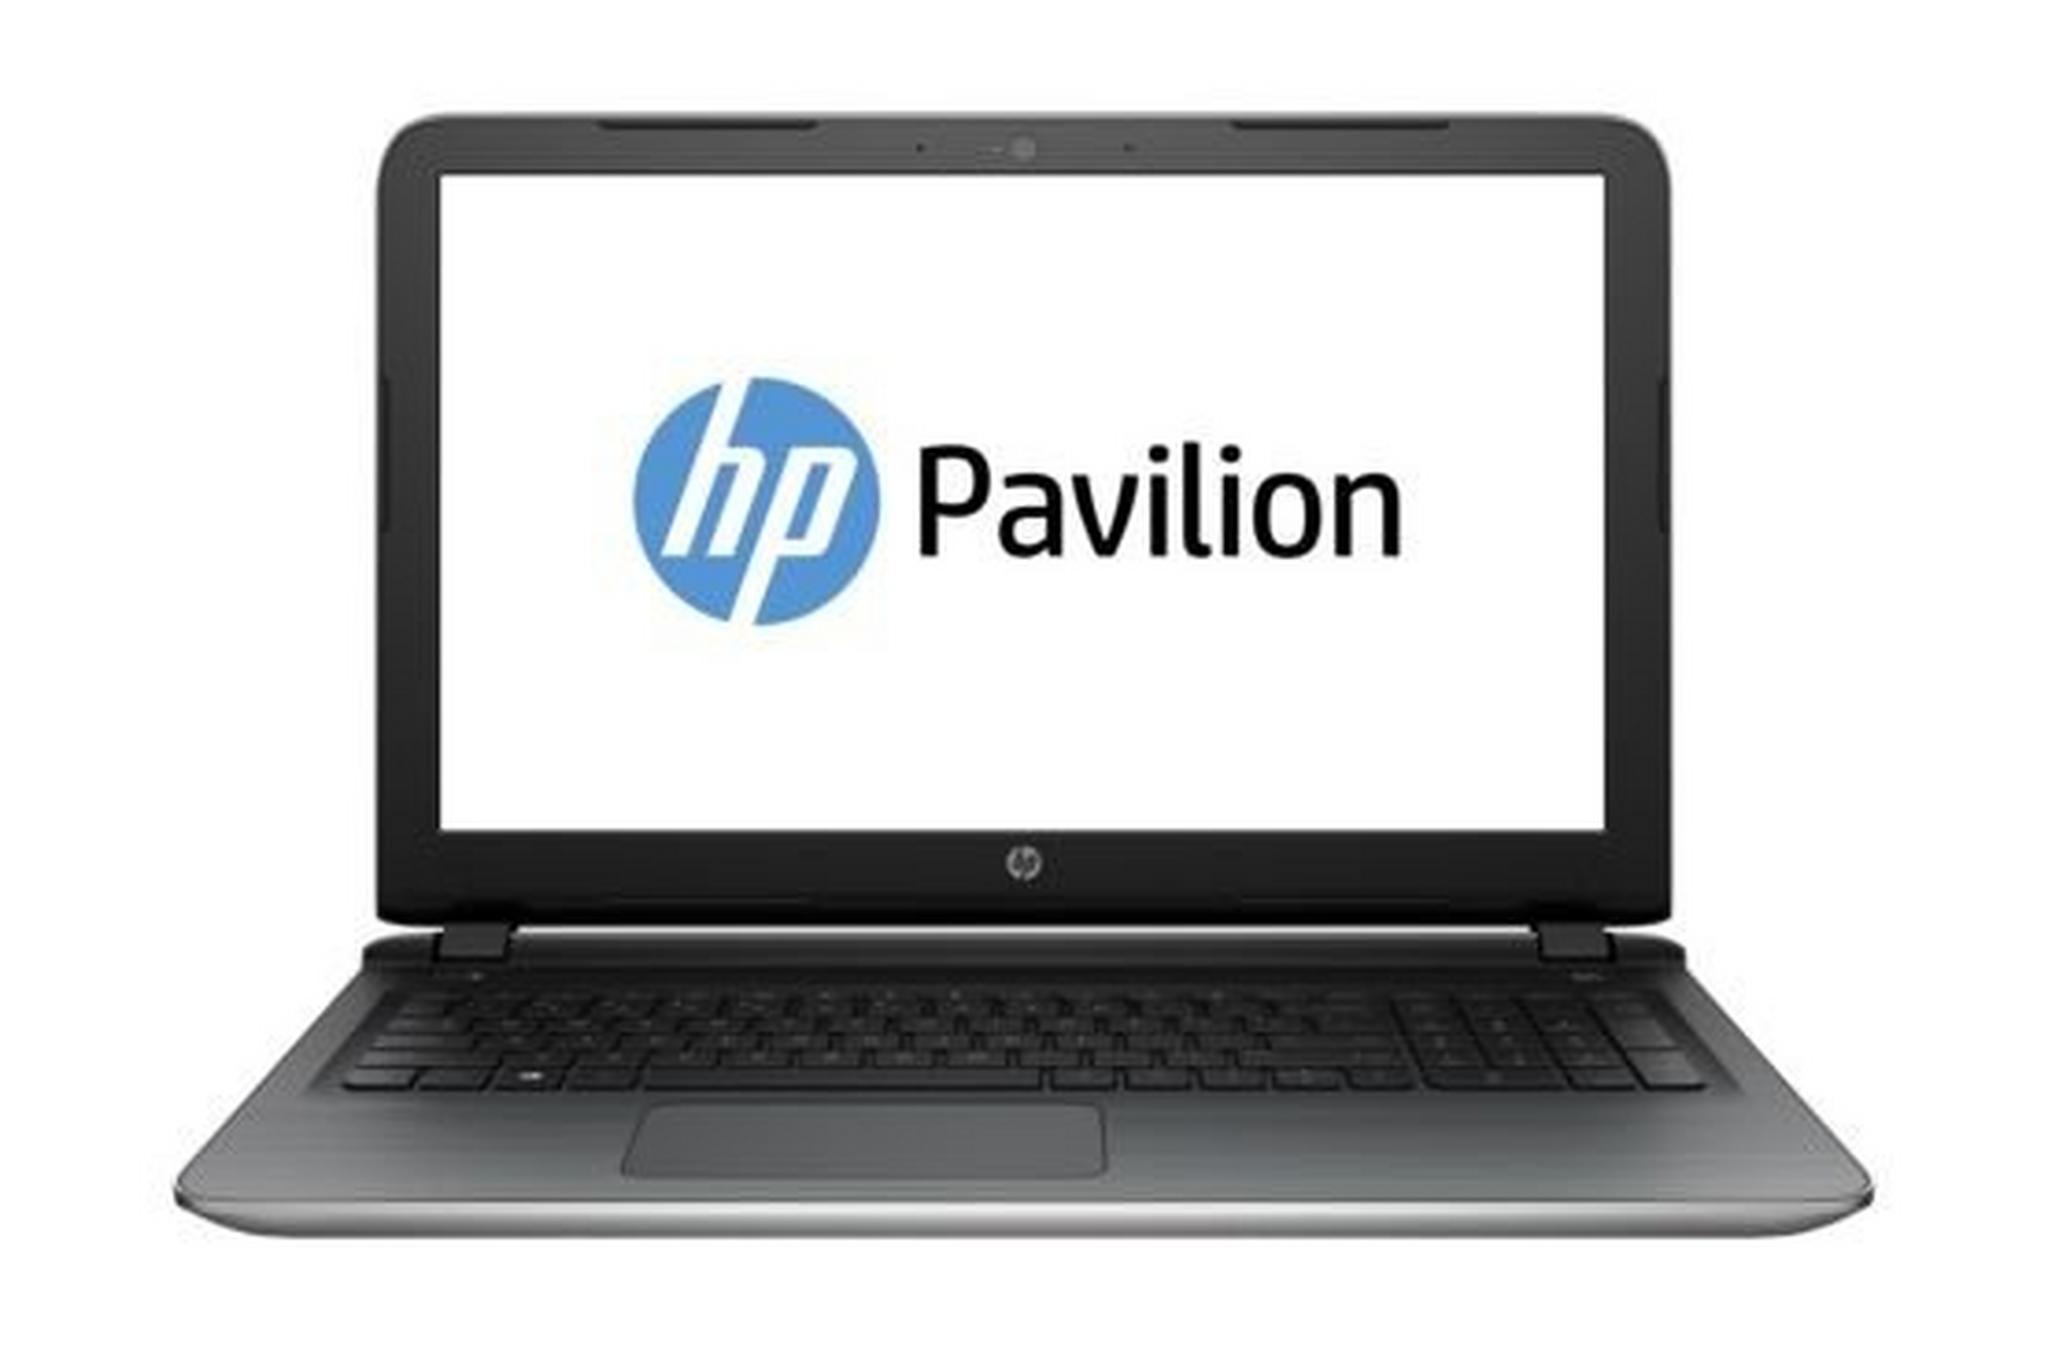 HP Pavilion 15-AB226 Core i7 16GB RAM 2TB HDD 15.6-inch Laptop – Silver